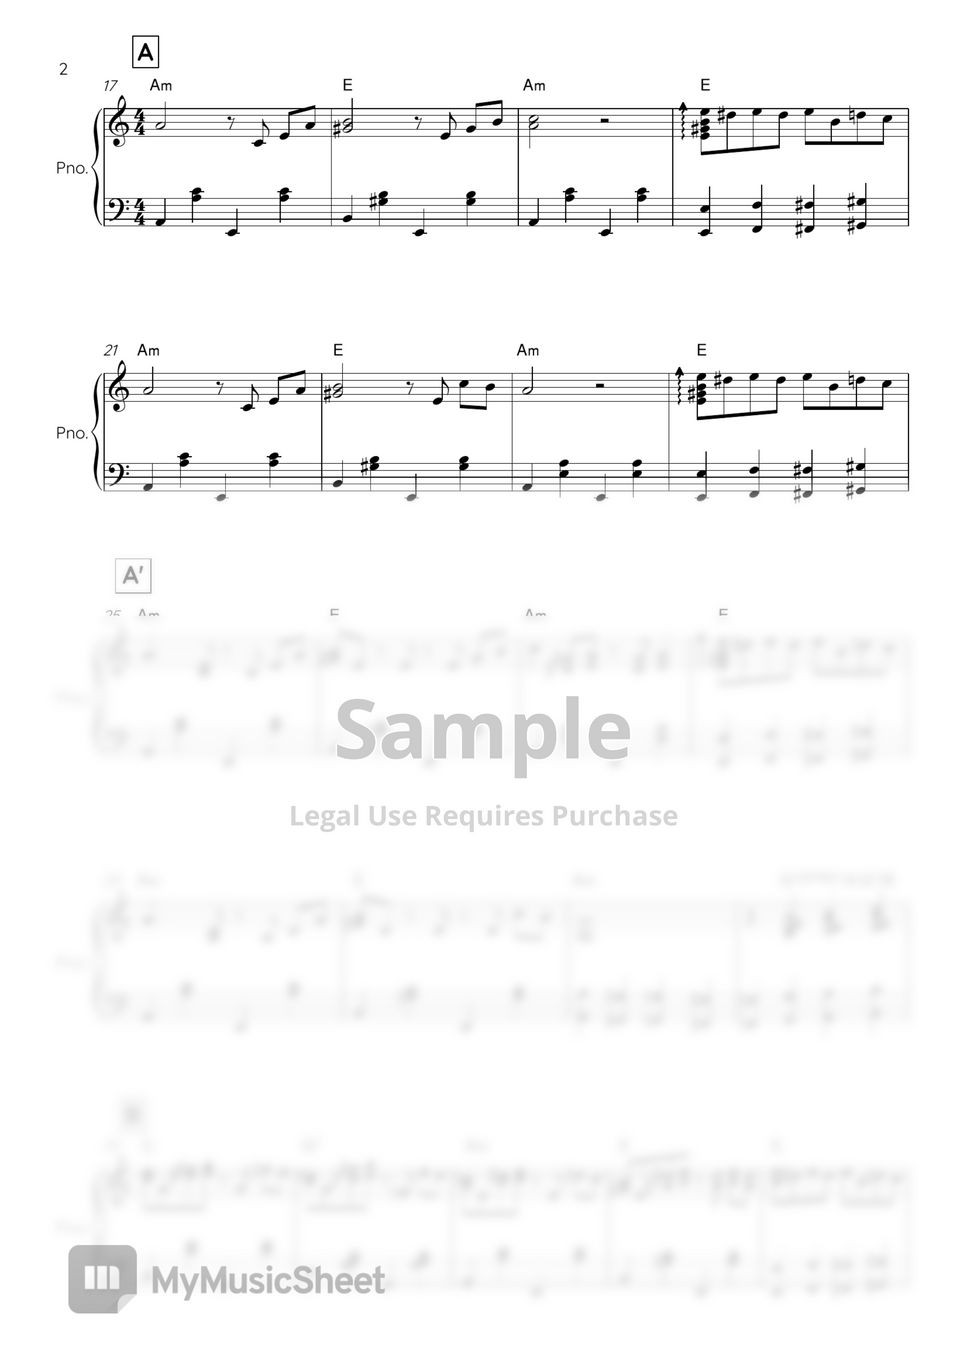 Beethoven - Für Elise (Jazz ver./variation) by LamiPiano